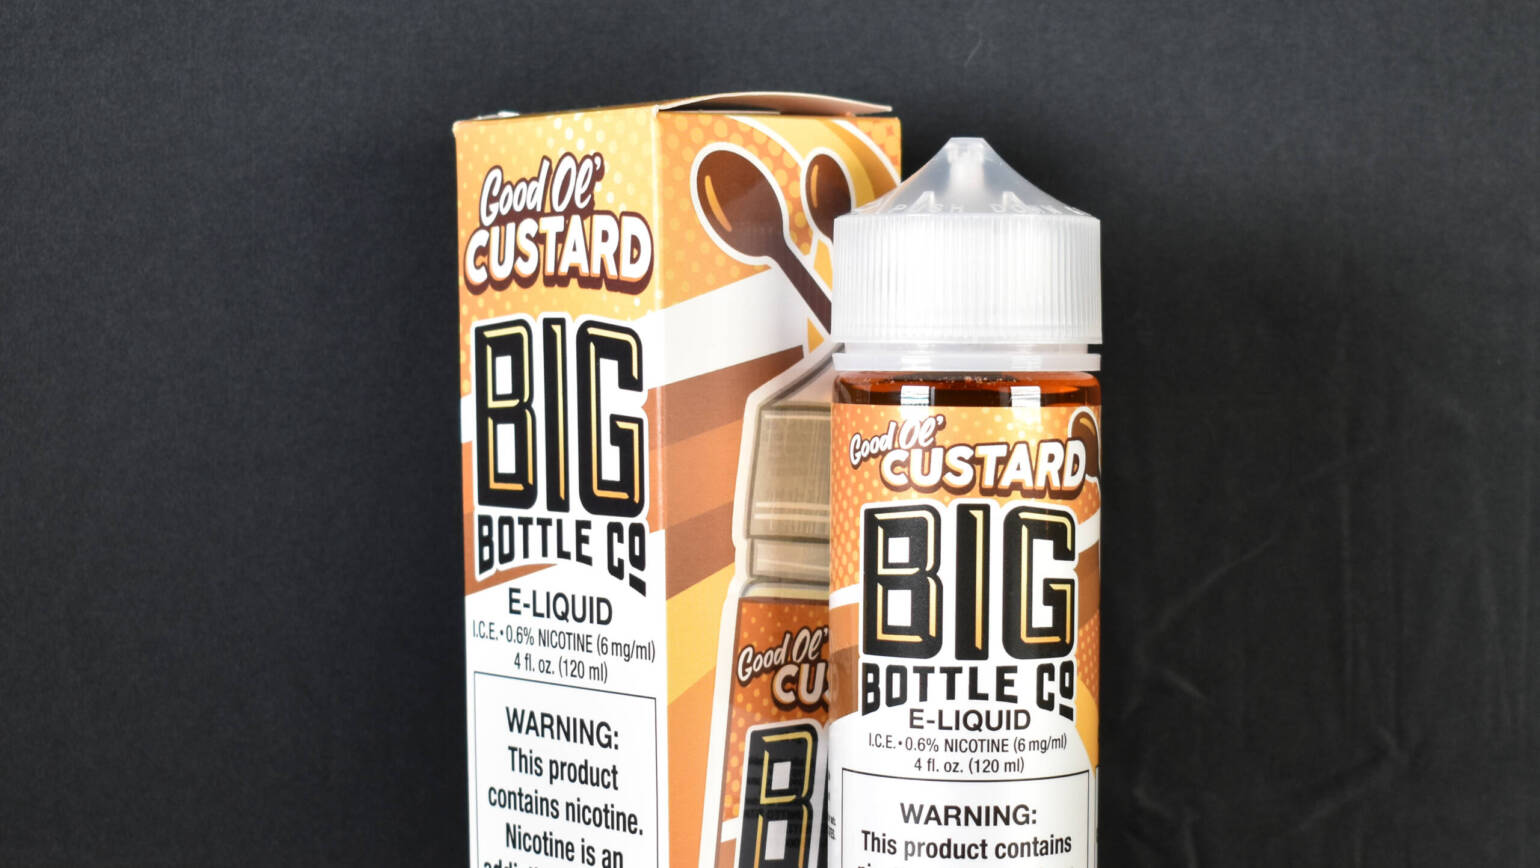 Big Bottle Co – Good Ol’ Custard